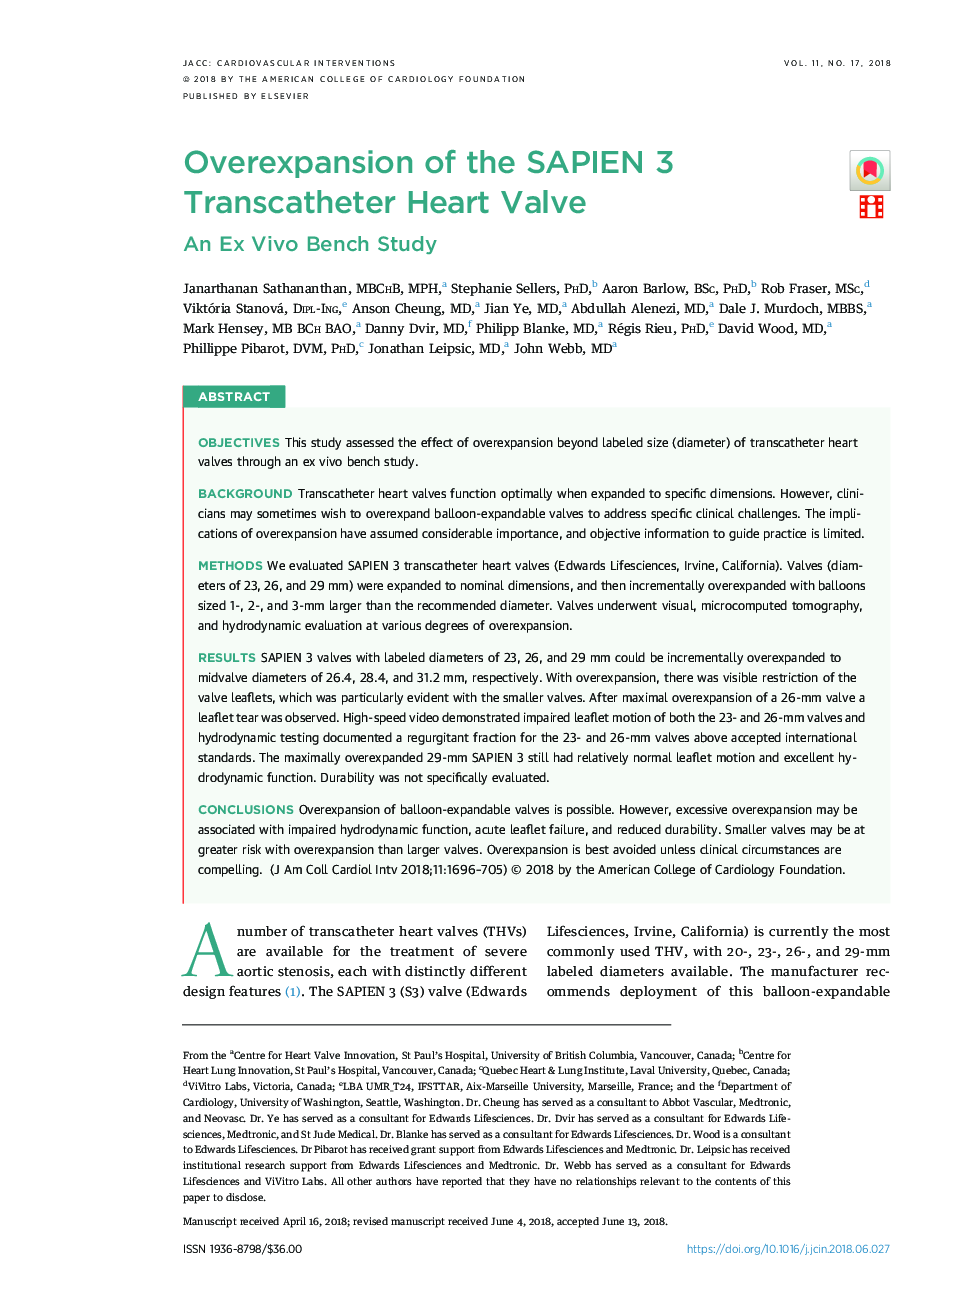 Overexpansion of the SAPIEN 3 Transcatheter Heart Valve